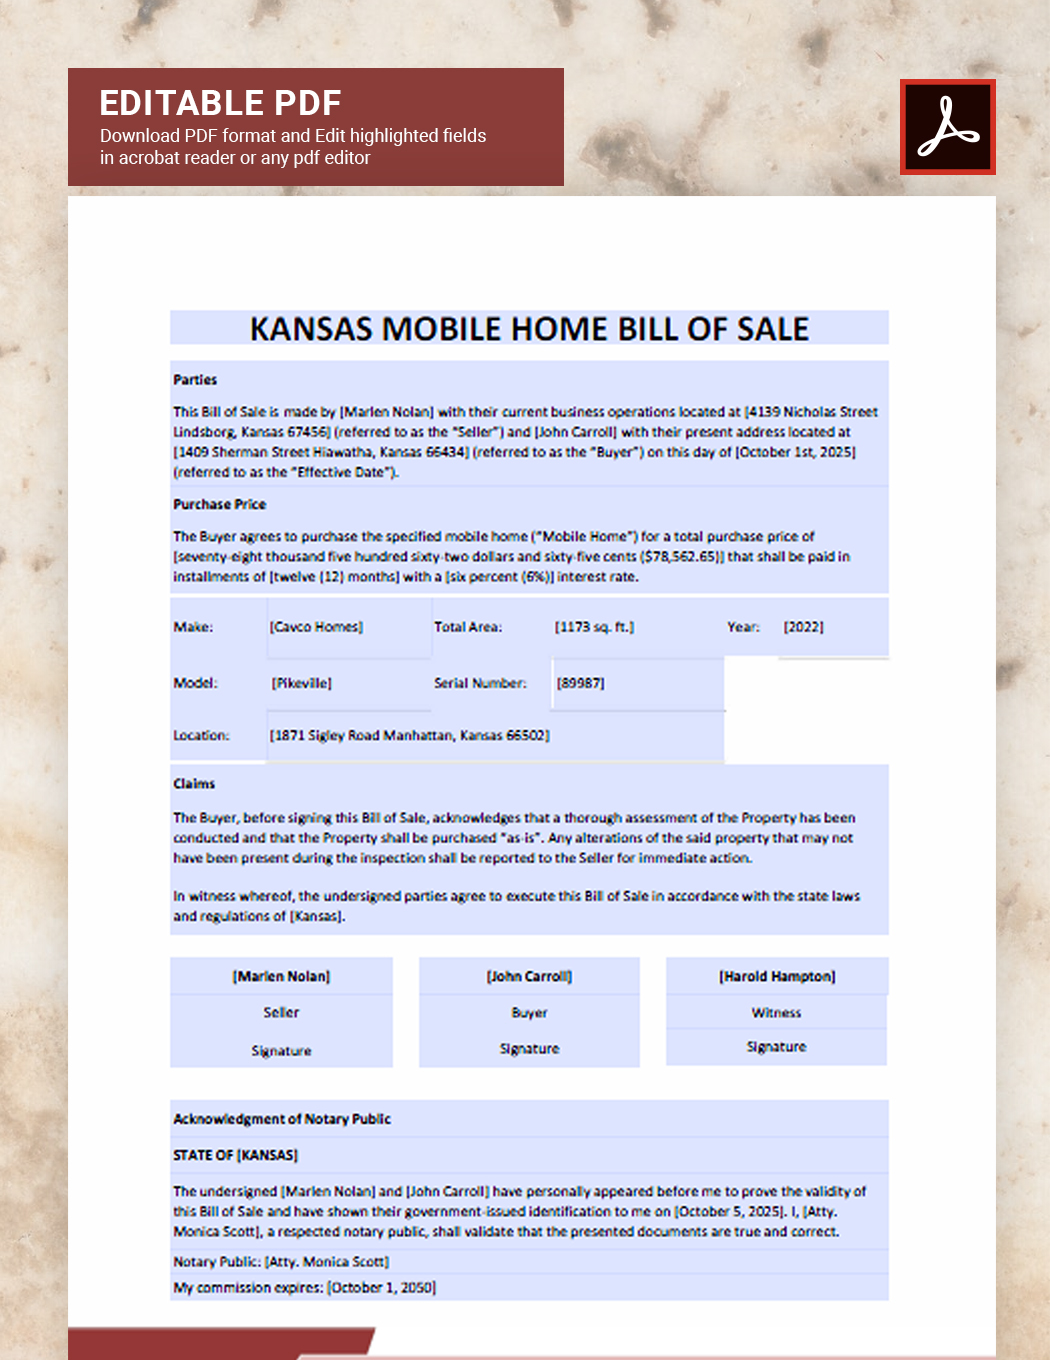 Kansas Mobile Home Bill of Sale Template